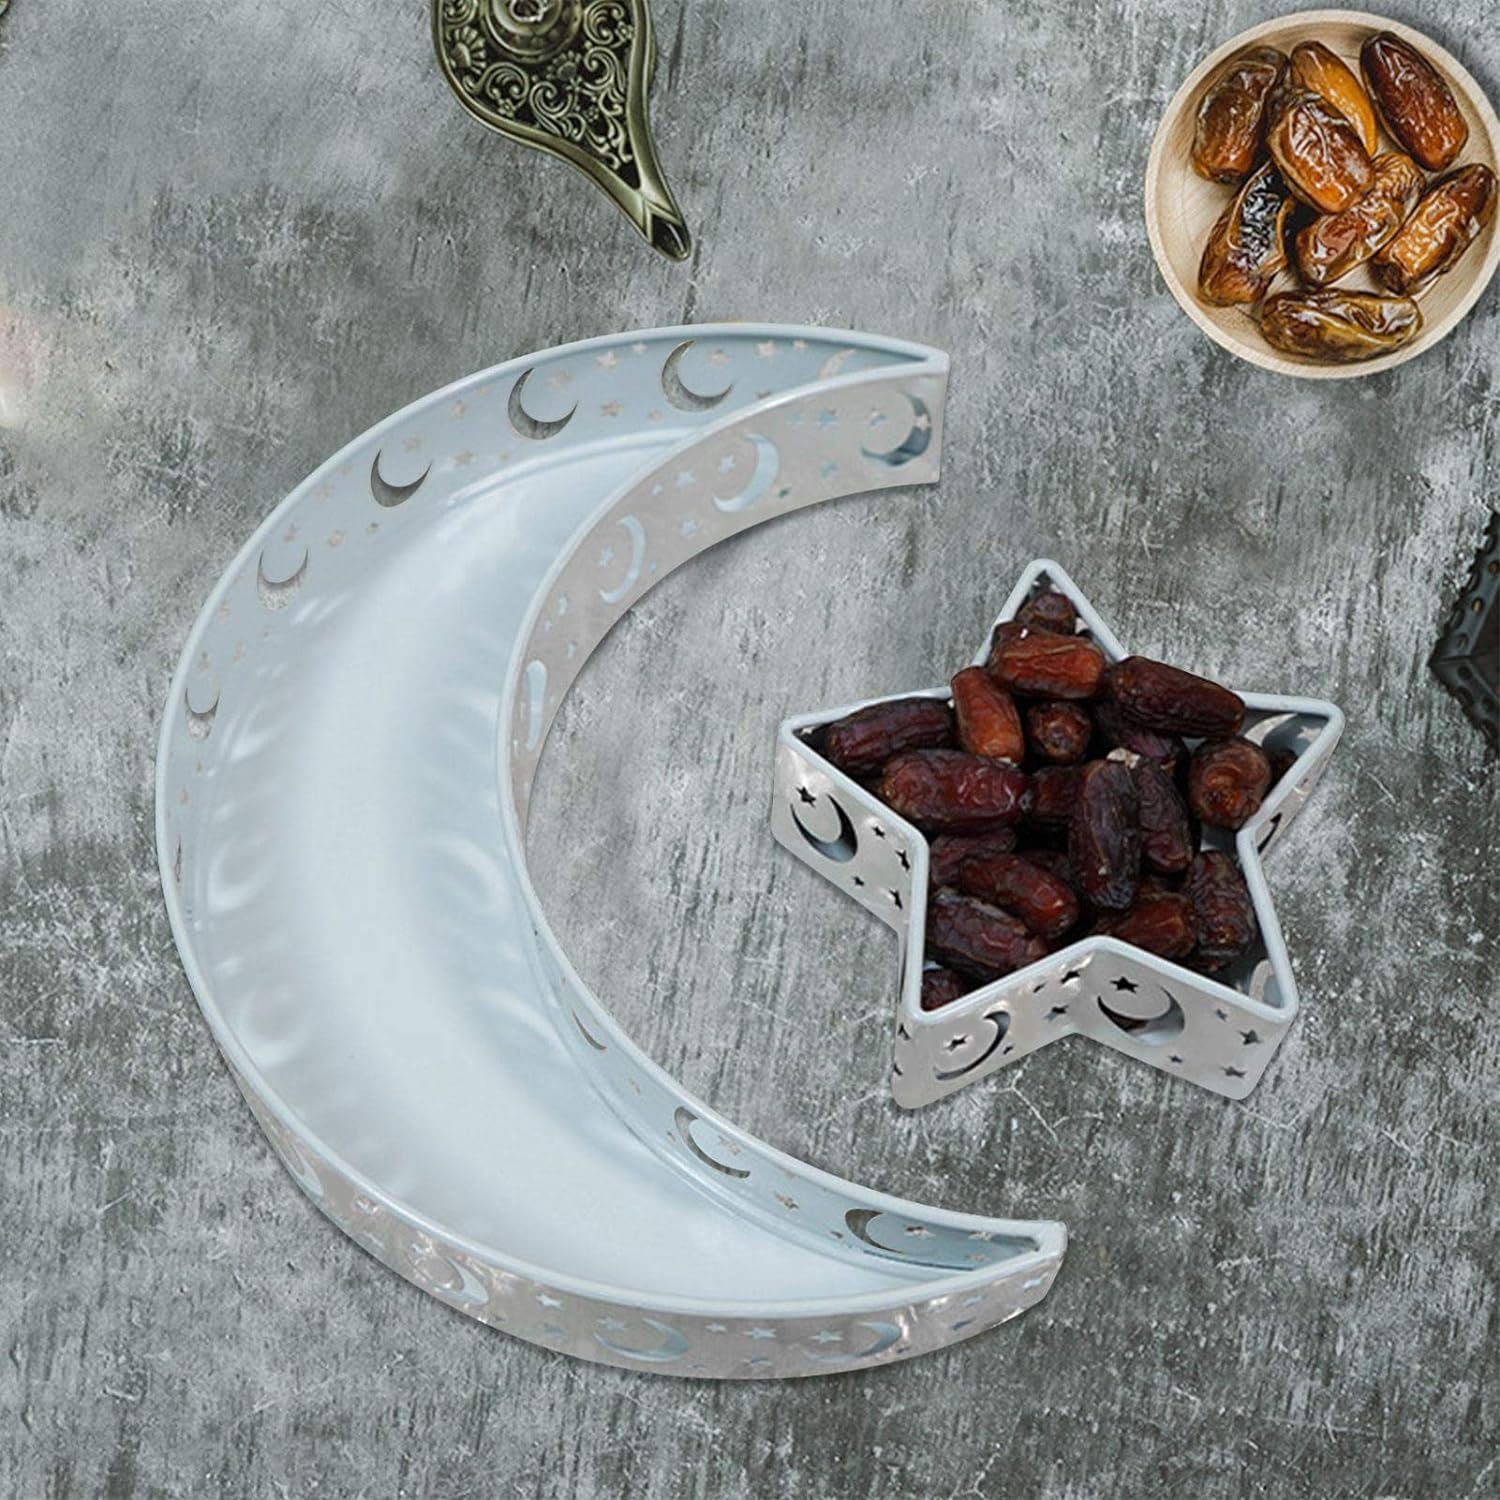 Jormftte Tablett Muslim Eid Food Tray,Moon Star Form Tablett,für Home Deko Gold, Weiß1